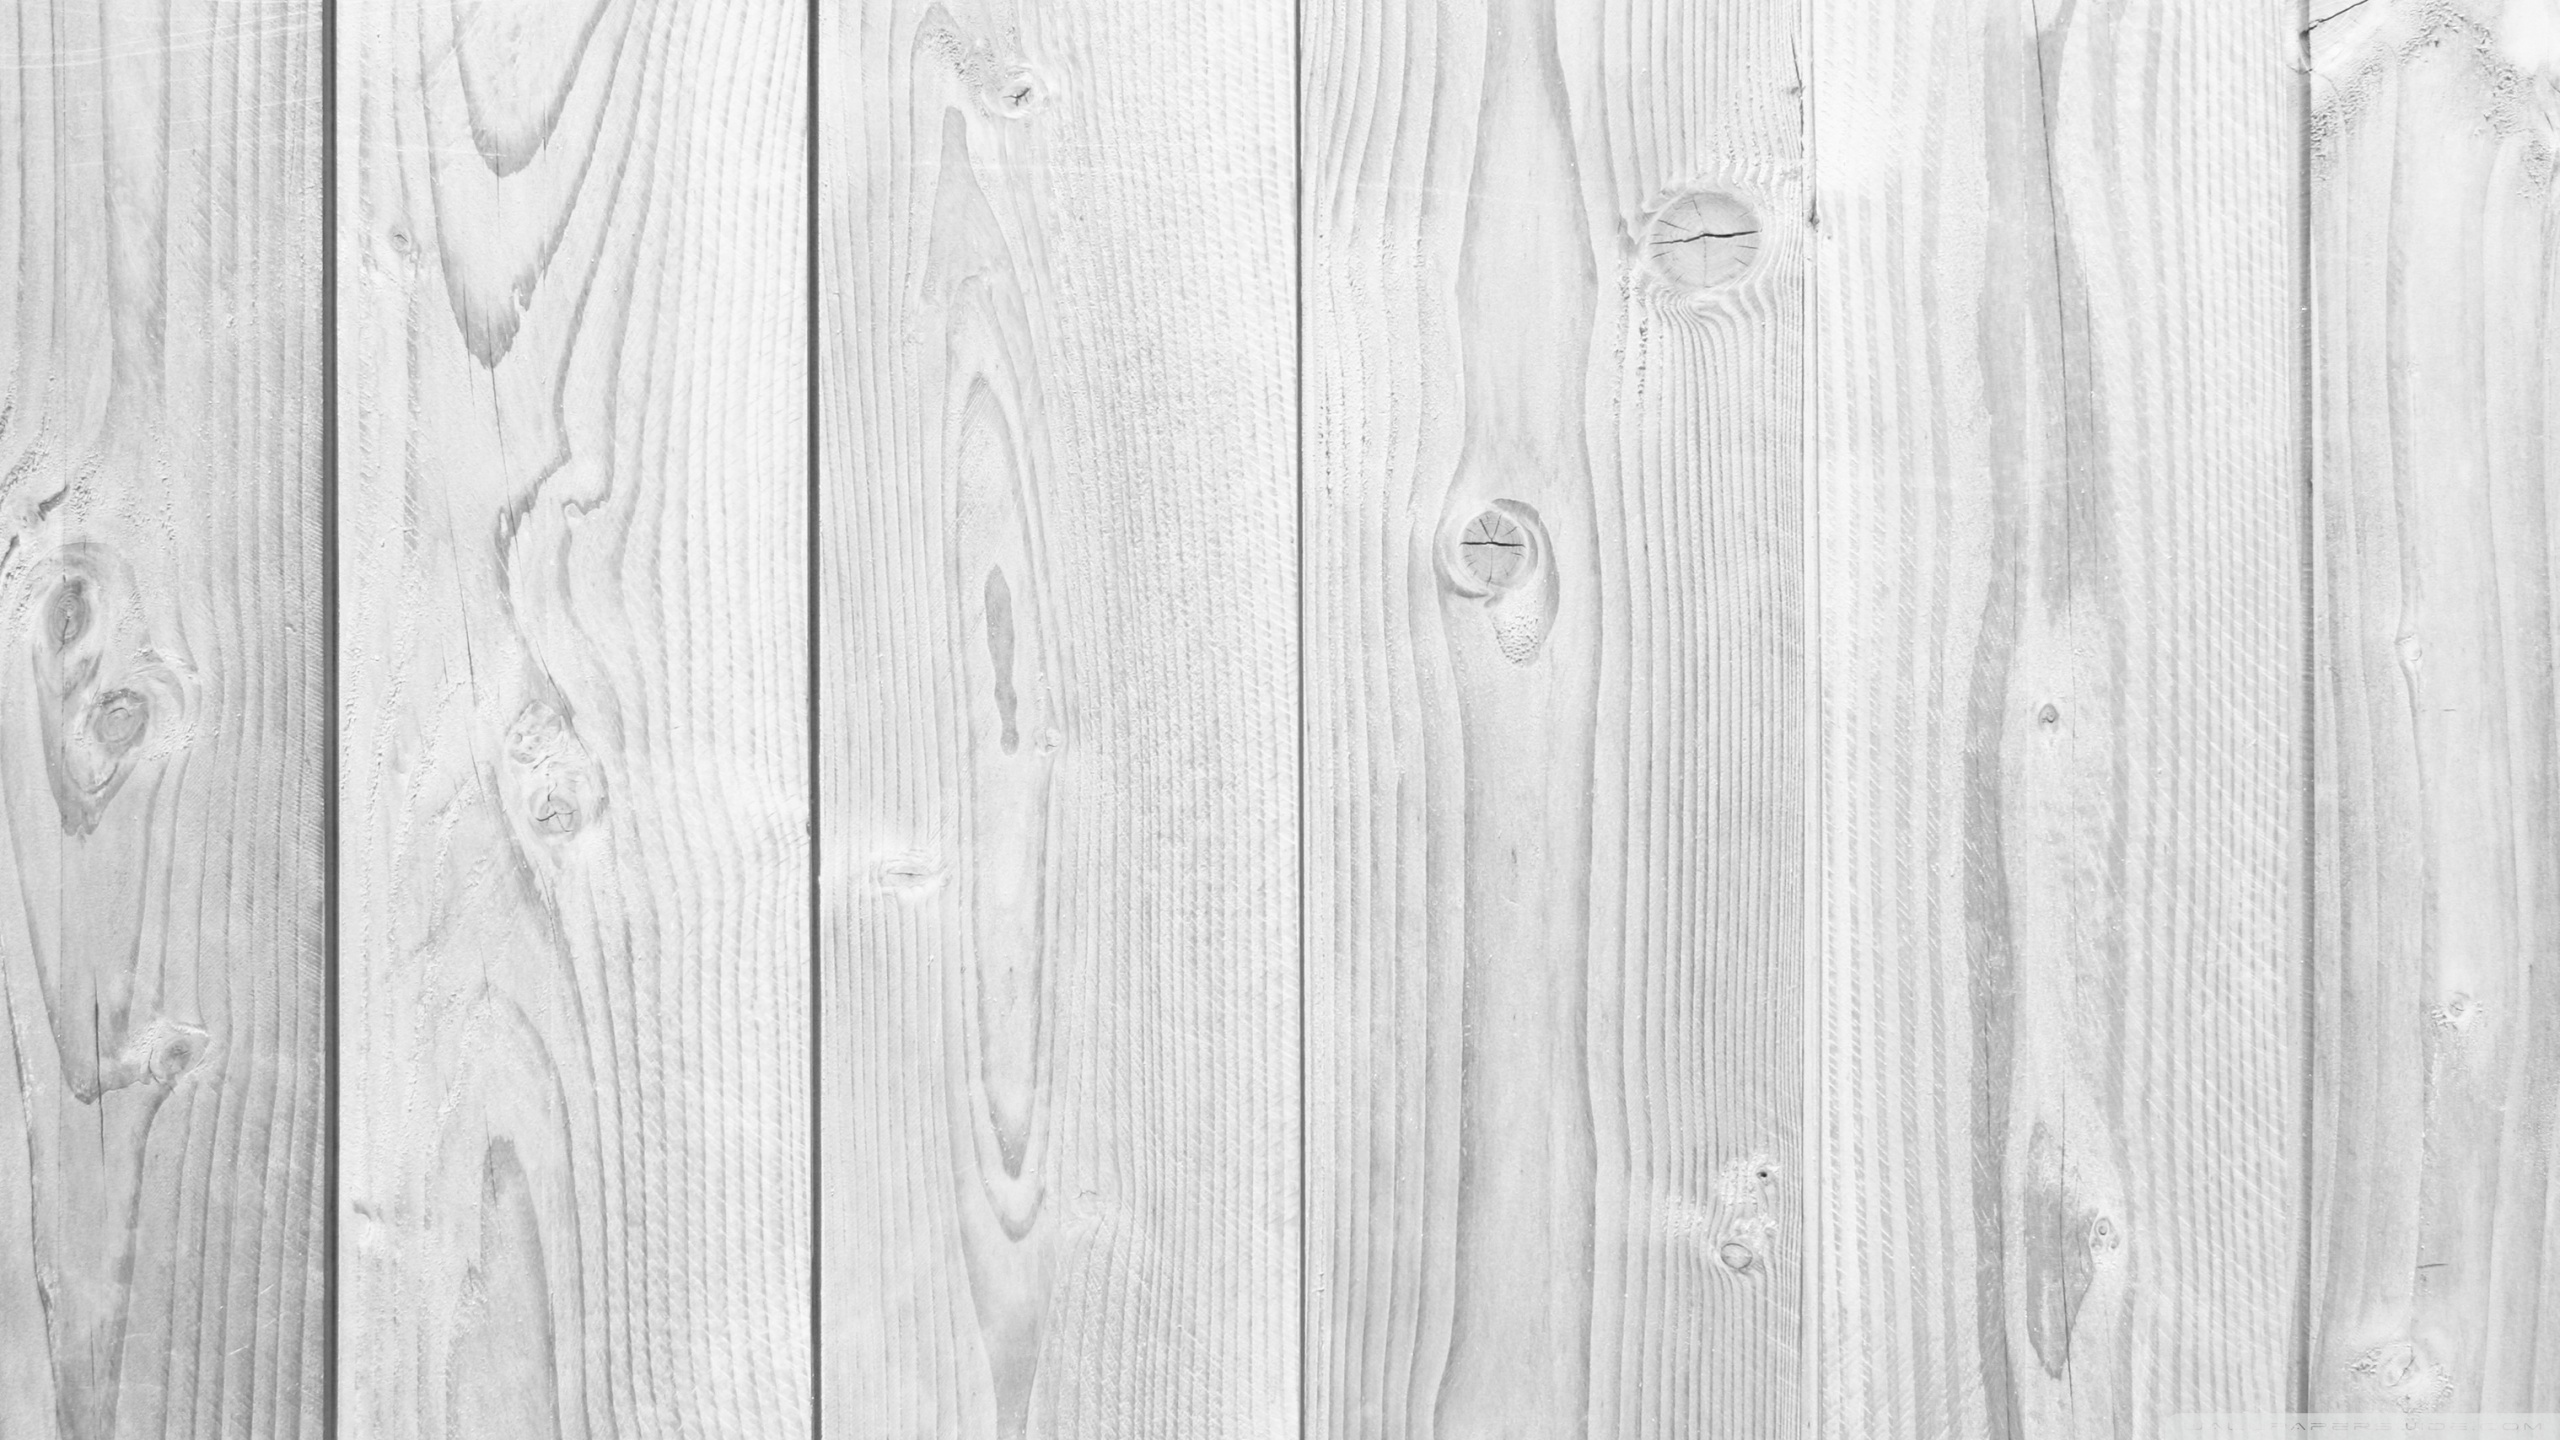 White Wooden Slats Ultra Hd Desktop Background Wallpaper For